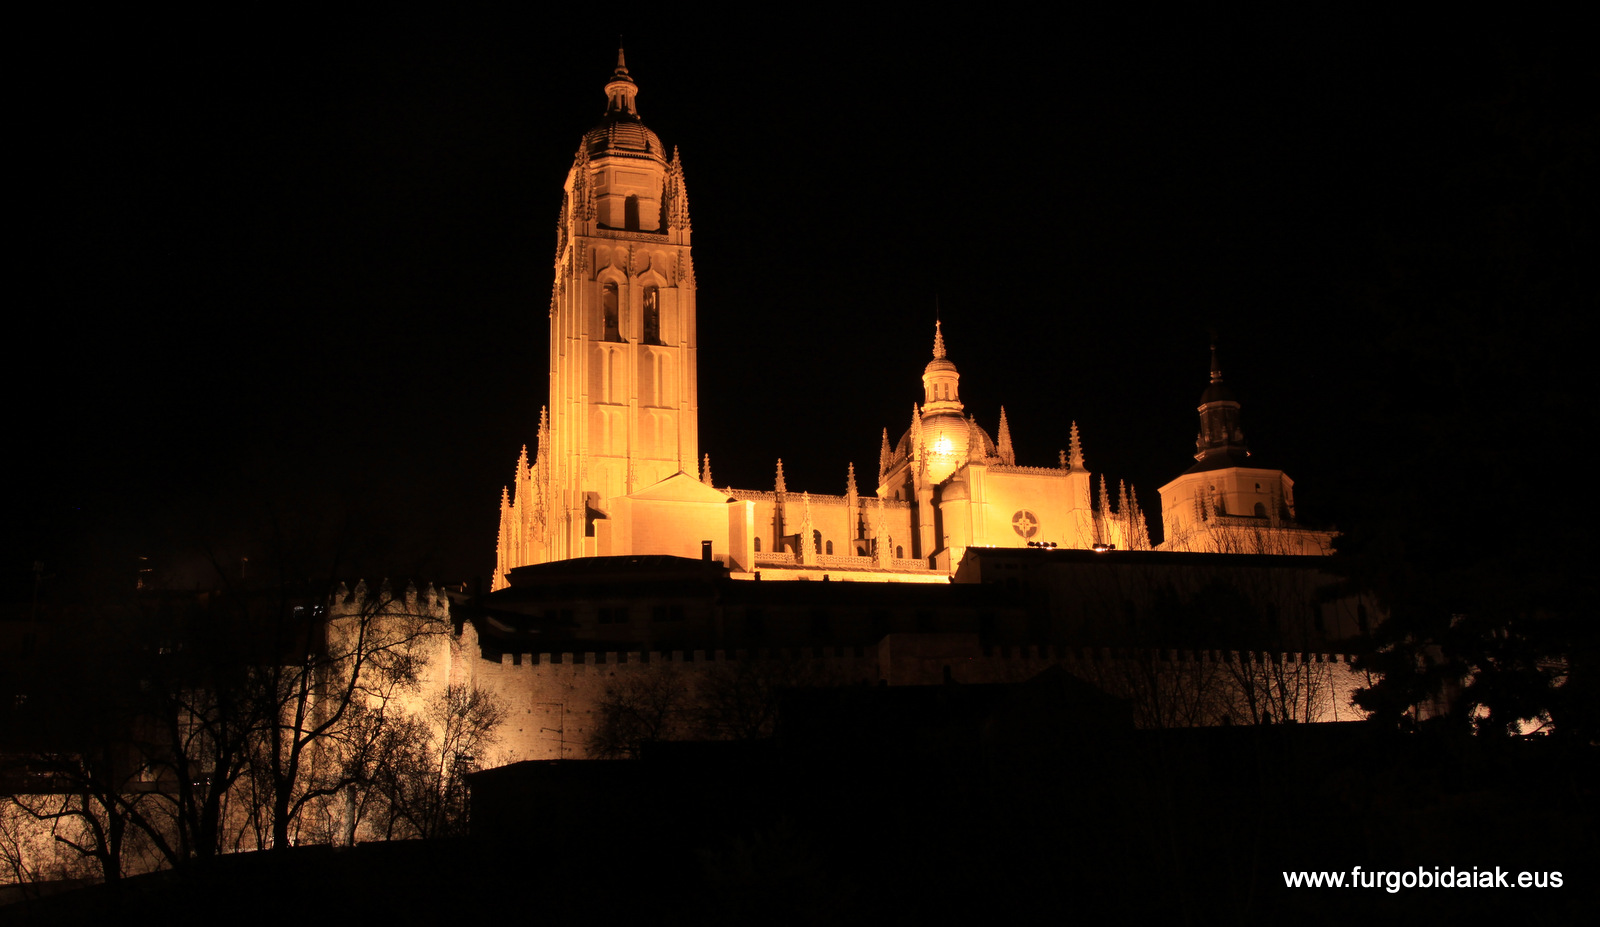 Catedral Segovia